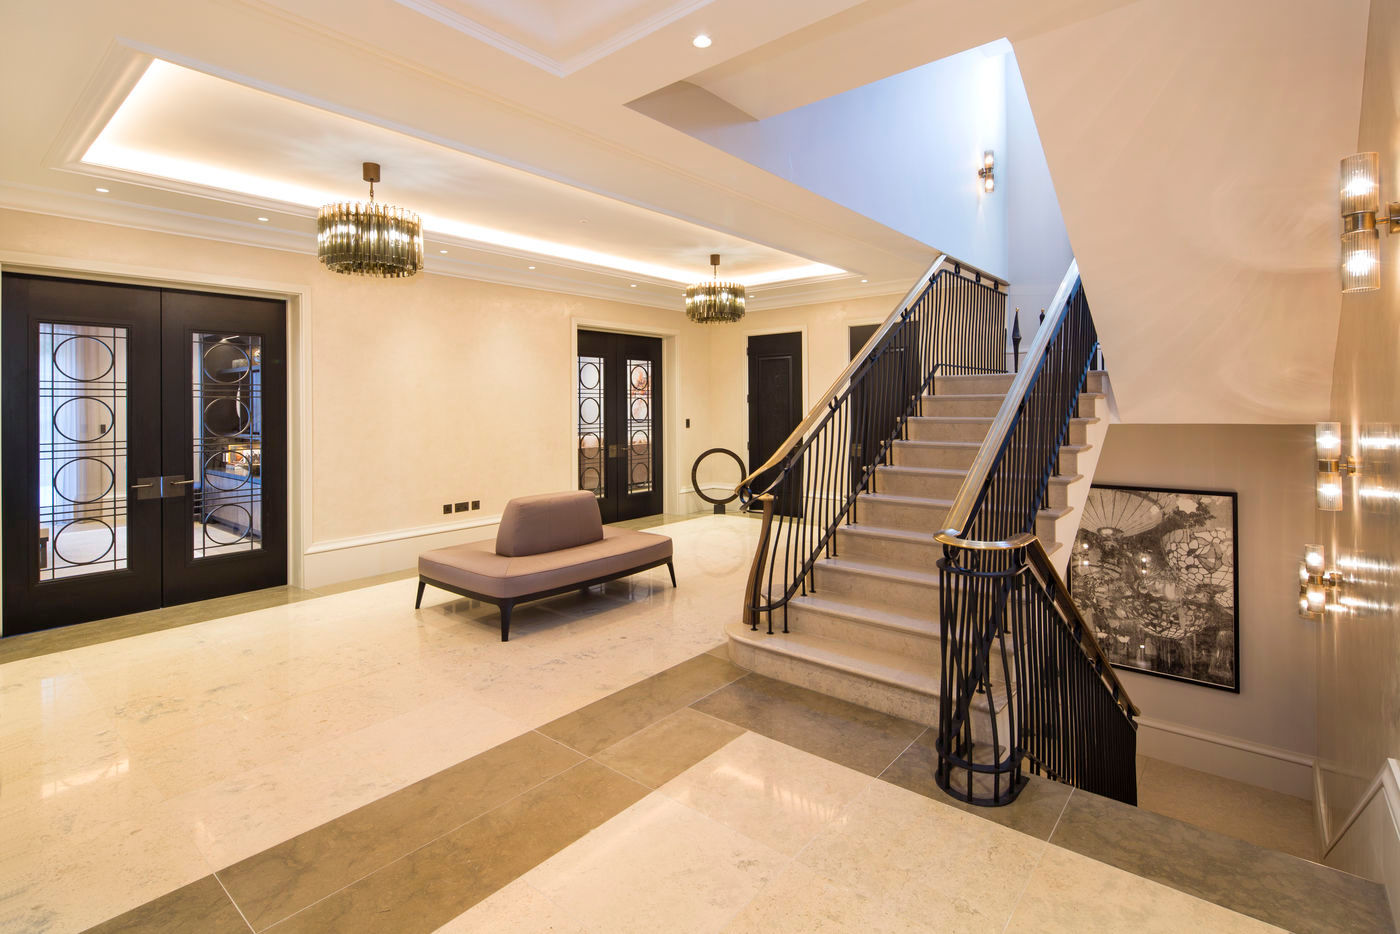 Hallway KSR Architects Koridor & Tangga Klasik Batu Kapur Hallway,spiral staircase